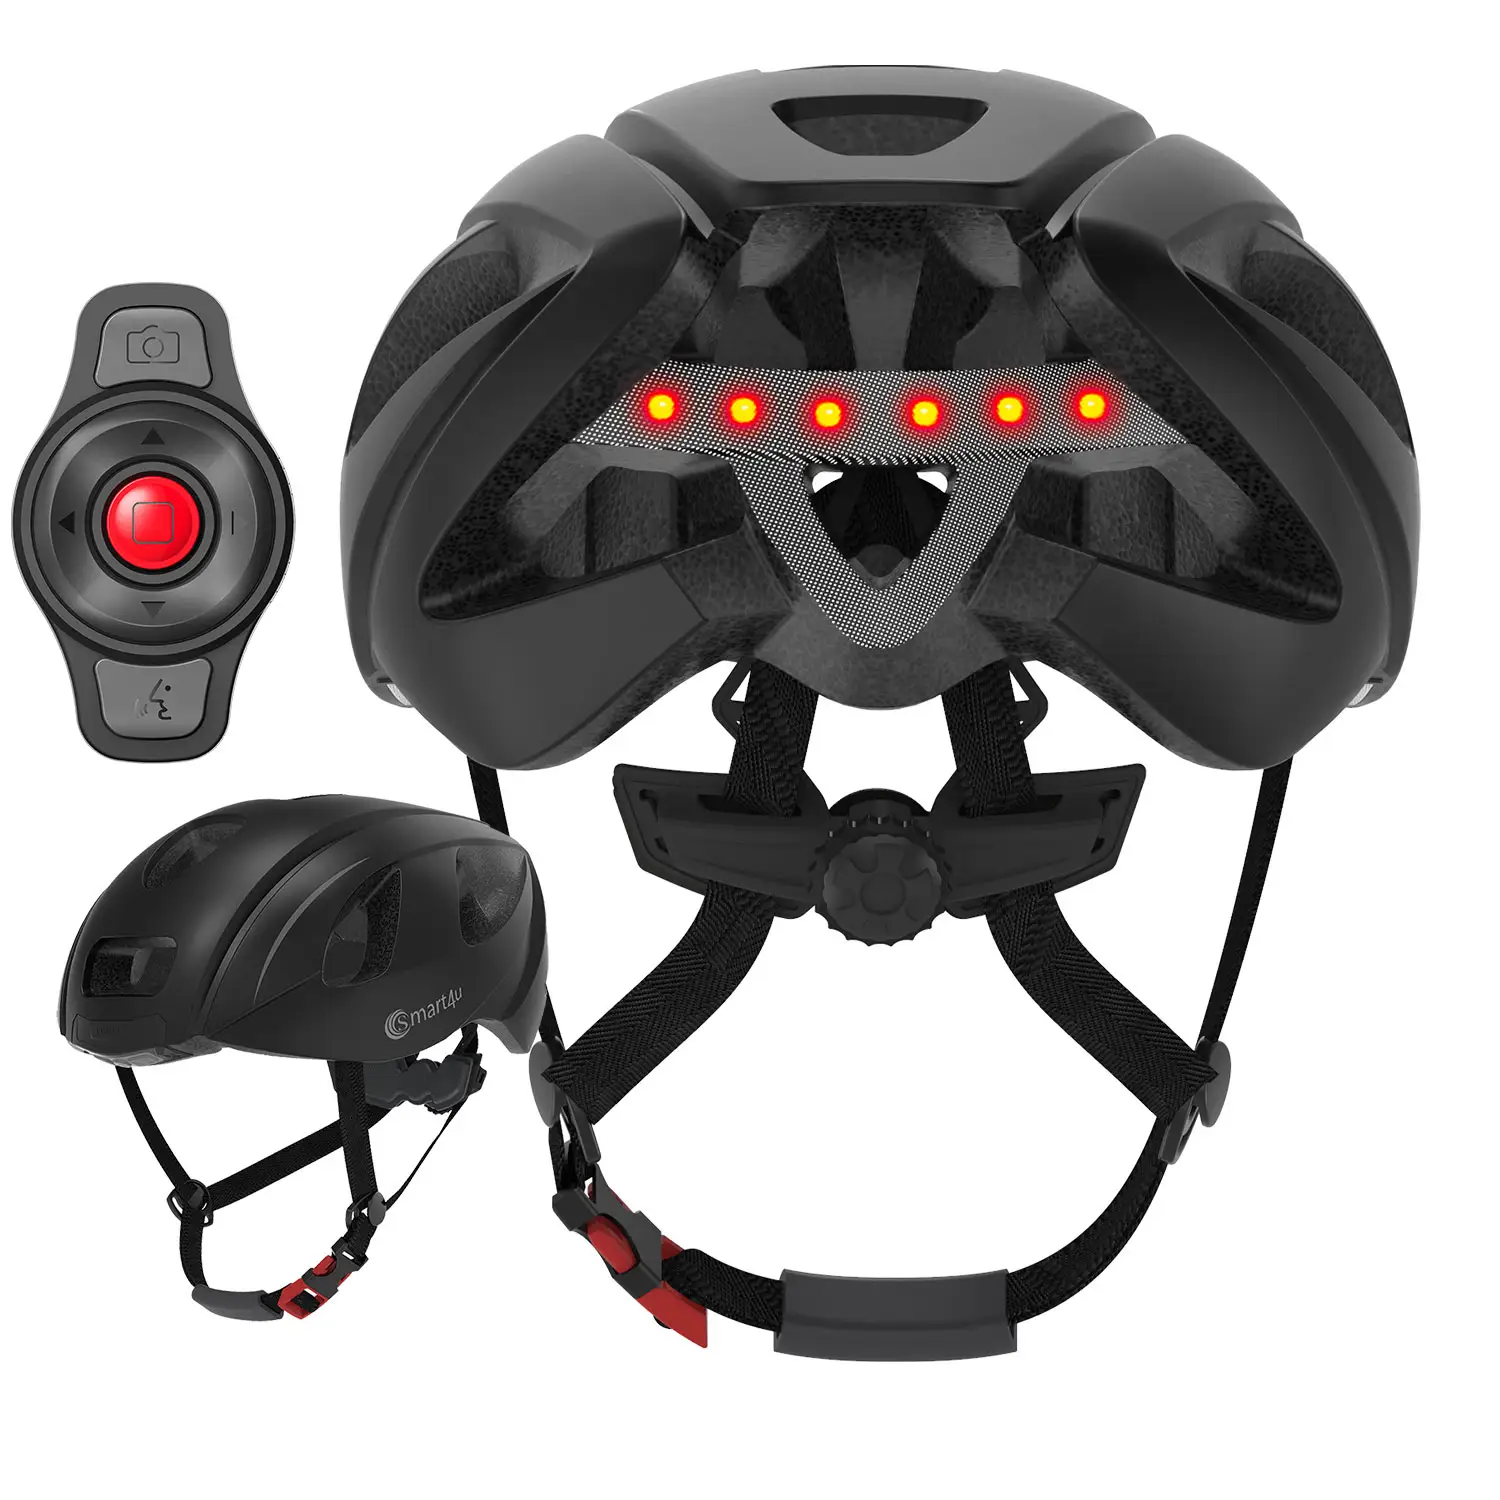 स्मार्ट एलईडी चेतावनी फ्लैश सवारी अमेरिकी साइकिल चालक हेलमेट smart4u बिक्री के लिए एलईडी प्रकाश हेलमेट एमटीबी बाइक हेलमेट